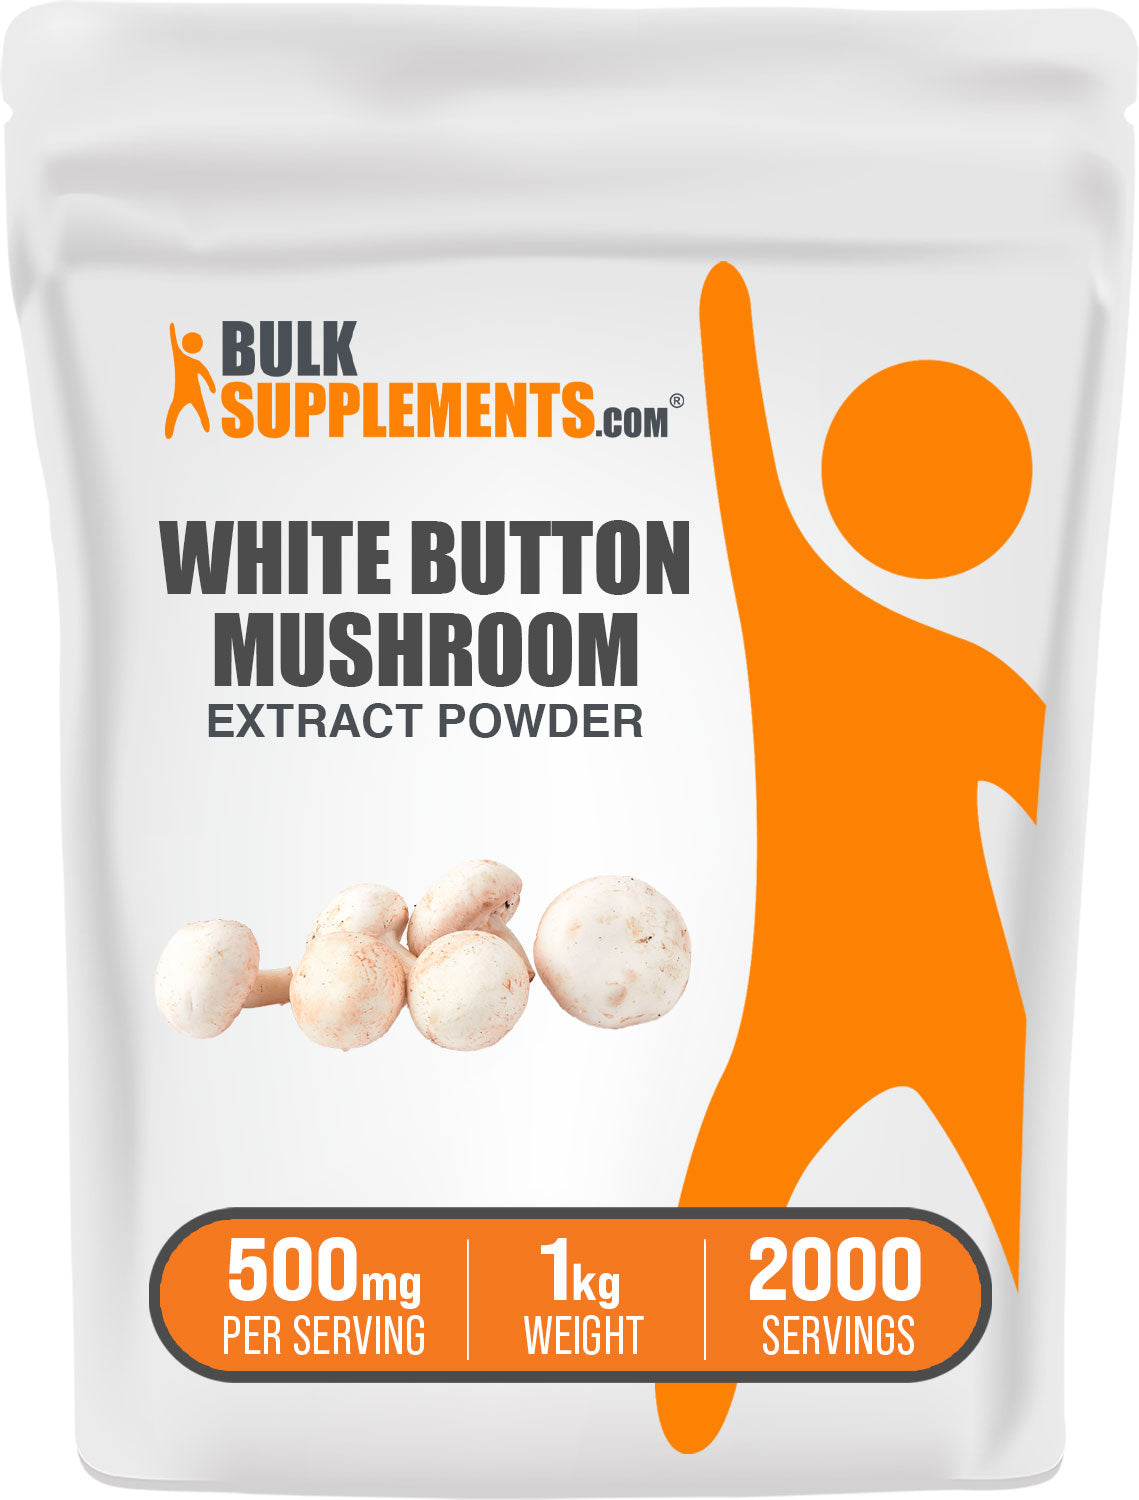 BulkSupplements.com White Button Mushroom Extract Powder 1kg Bag